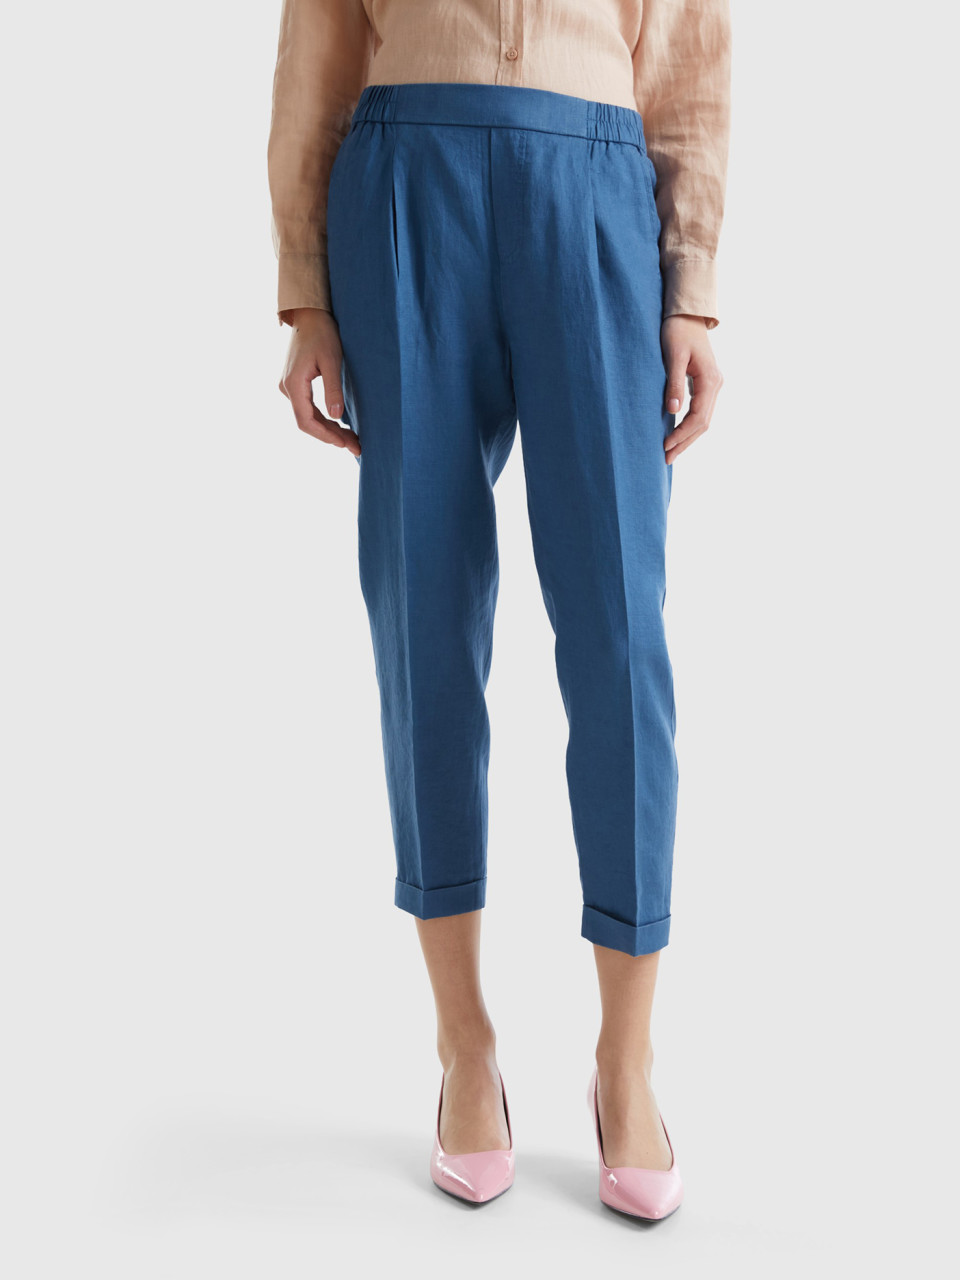 Benetton, Cropped Trousers In 100% Linen, Air Force Blue, Women